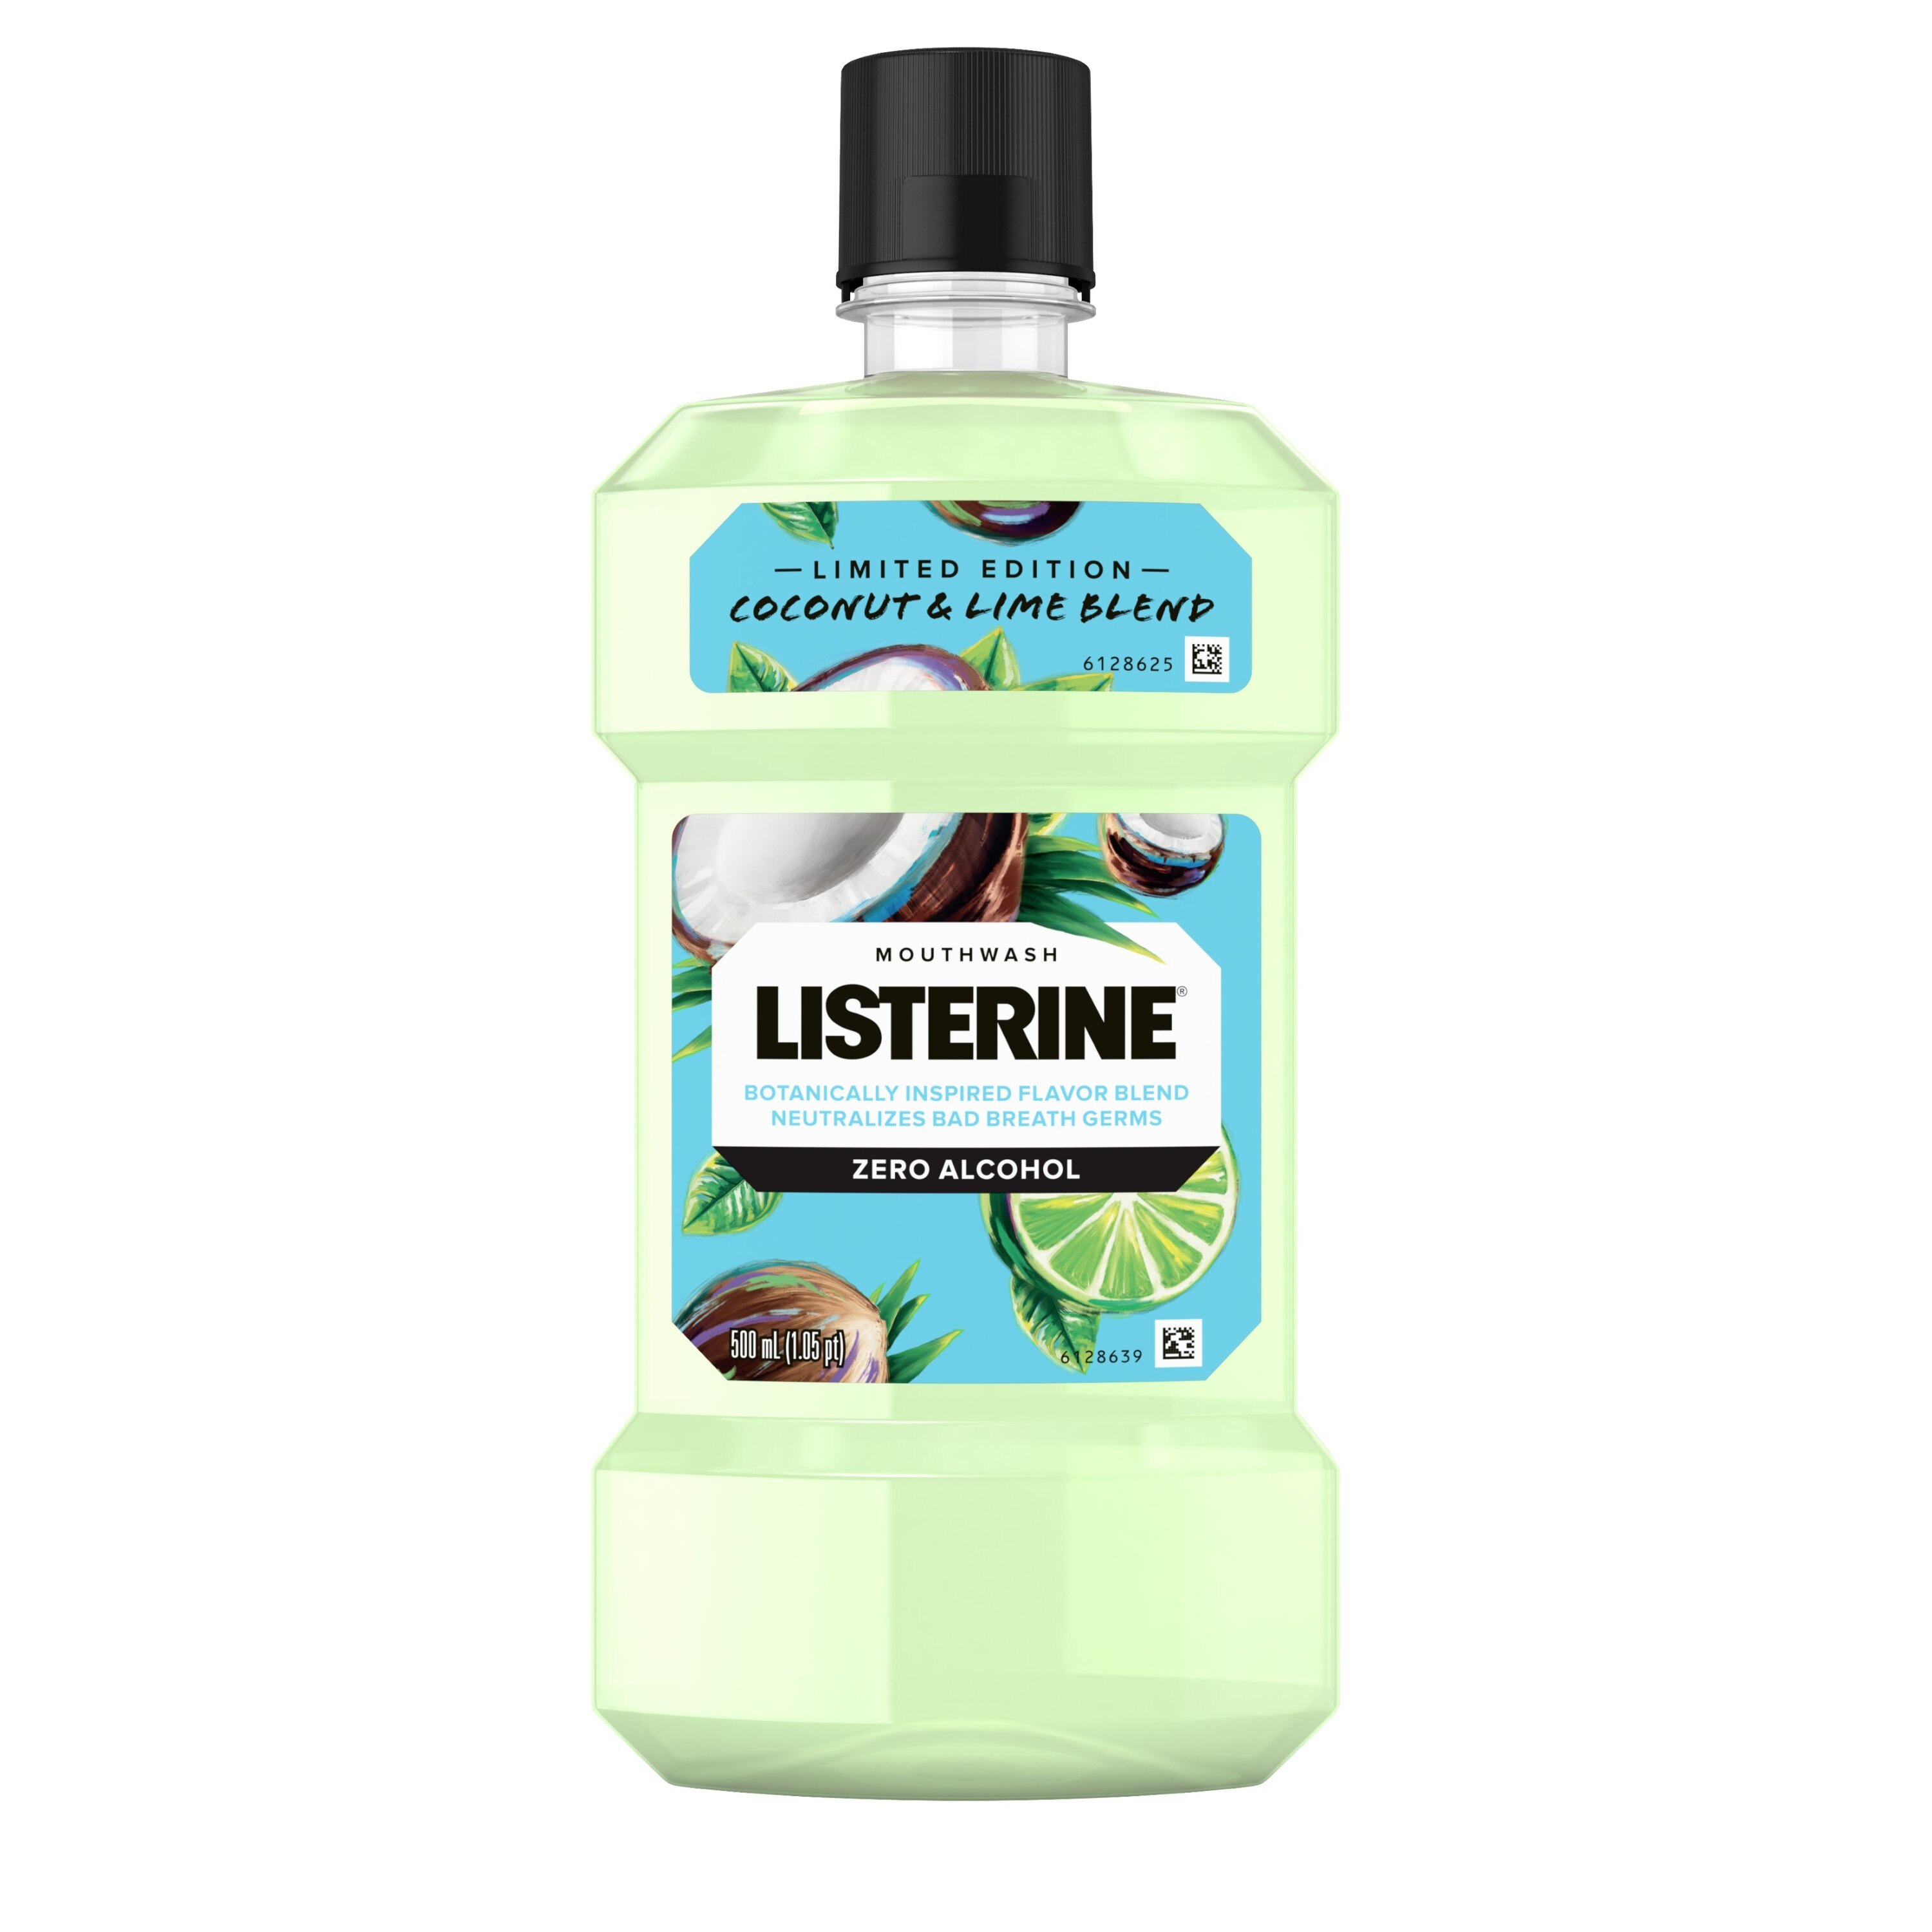 Listerine Zero Alcohol Mouthwash, Limited Edition Coconut Lime, 16.9 OZ